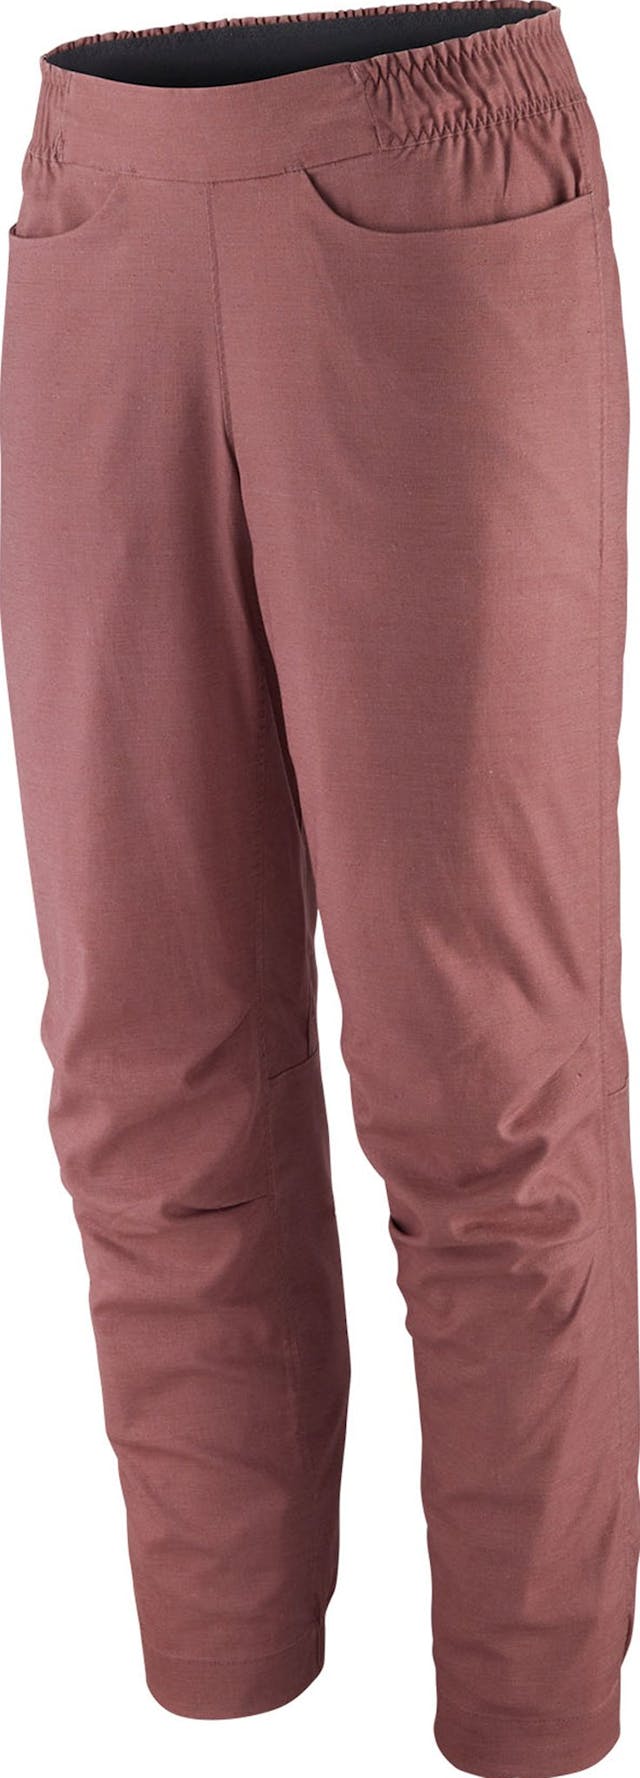 Product image for Hampi Rock Pants - Regular - Women's